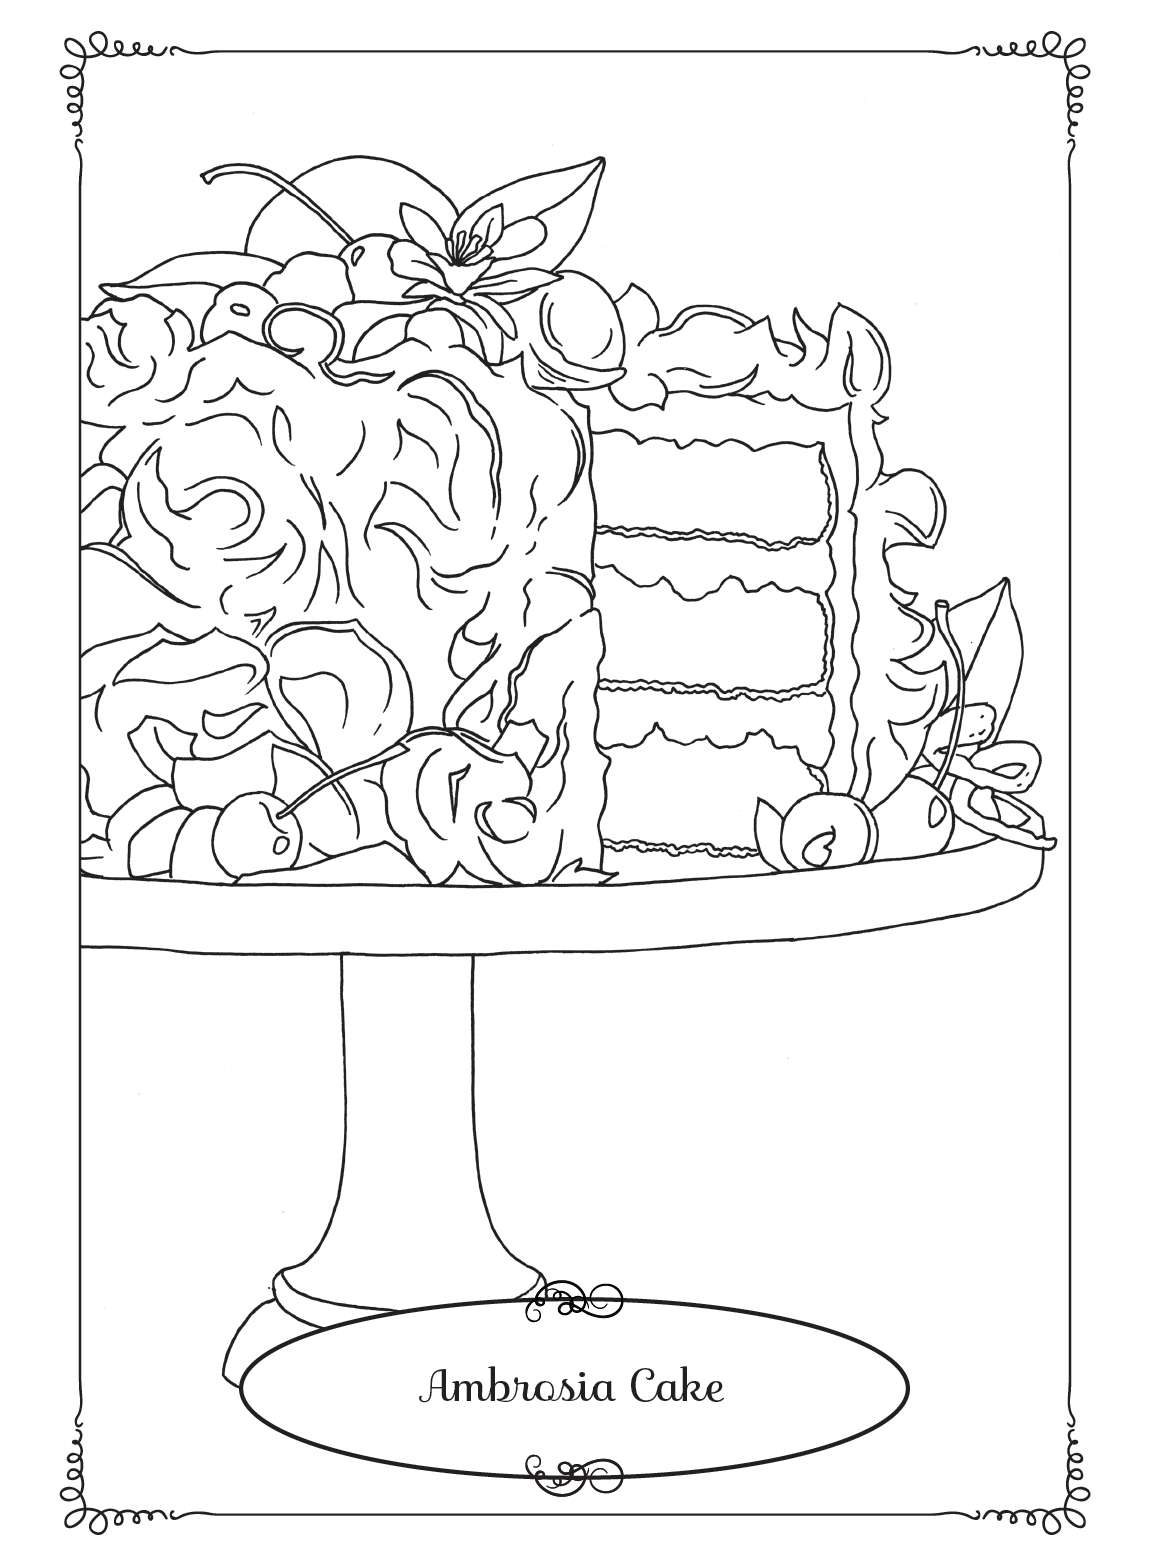 Ambrosia Cake Coloring Page